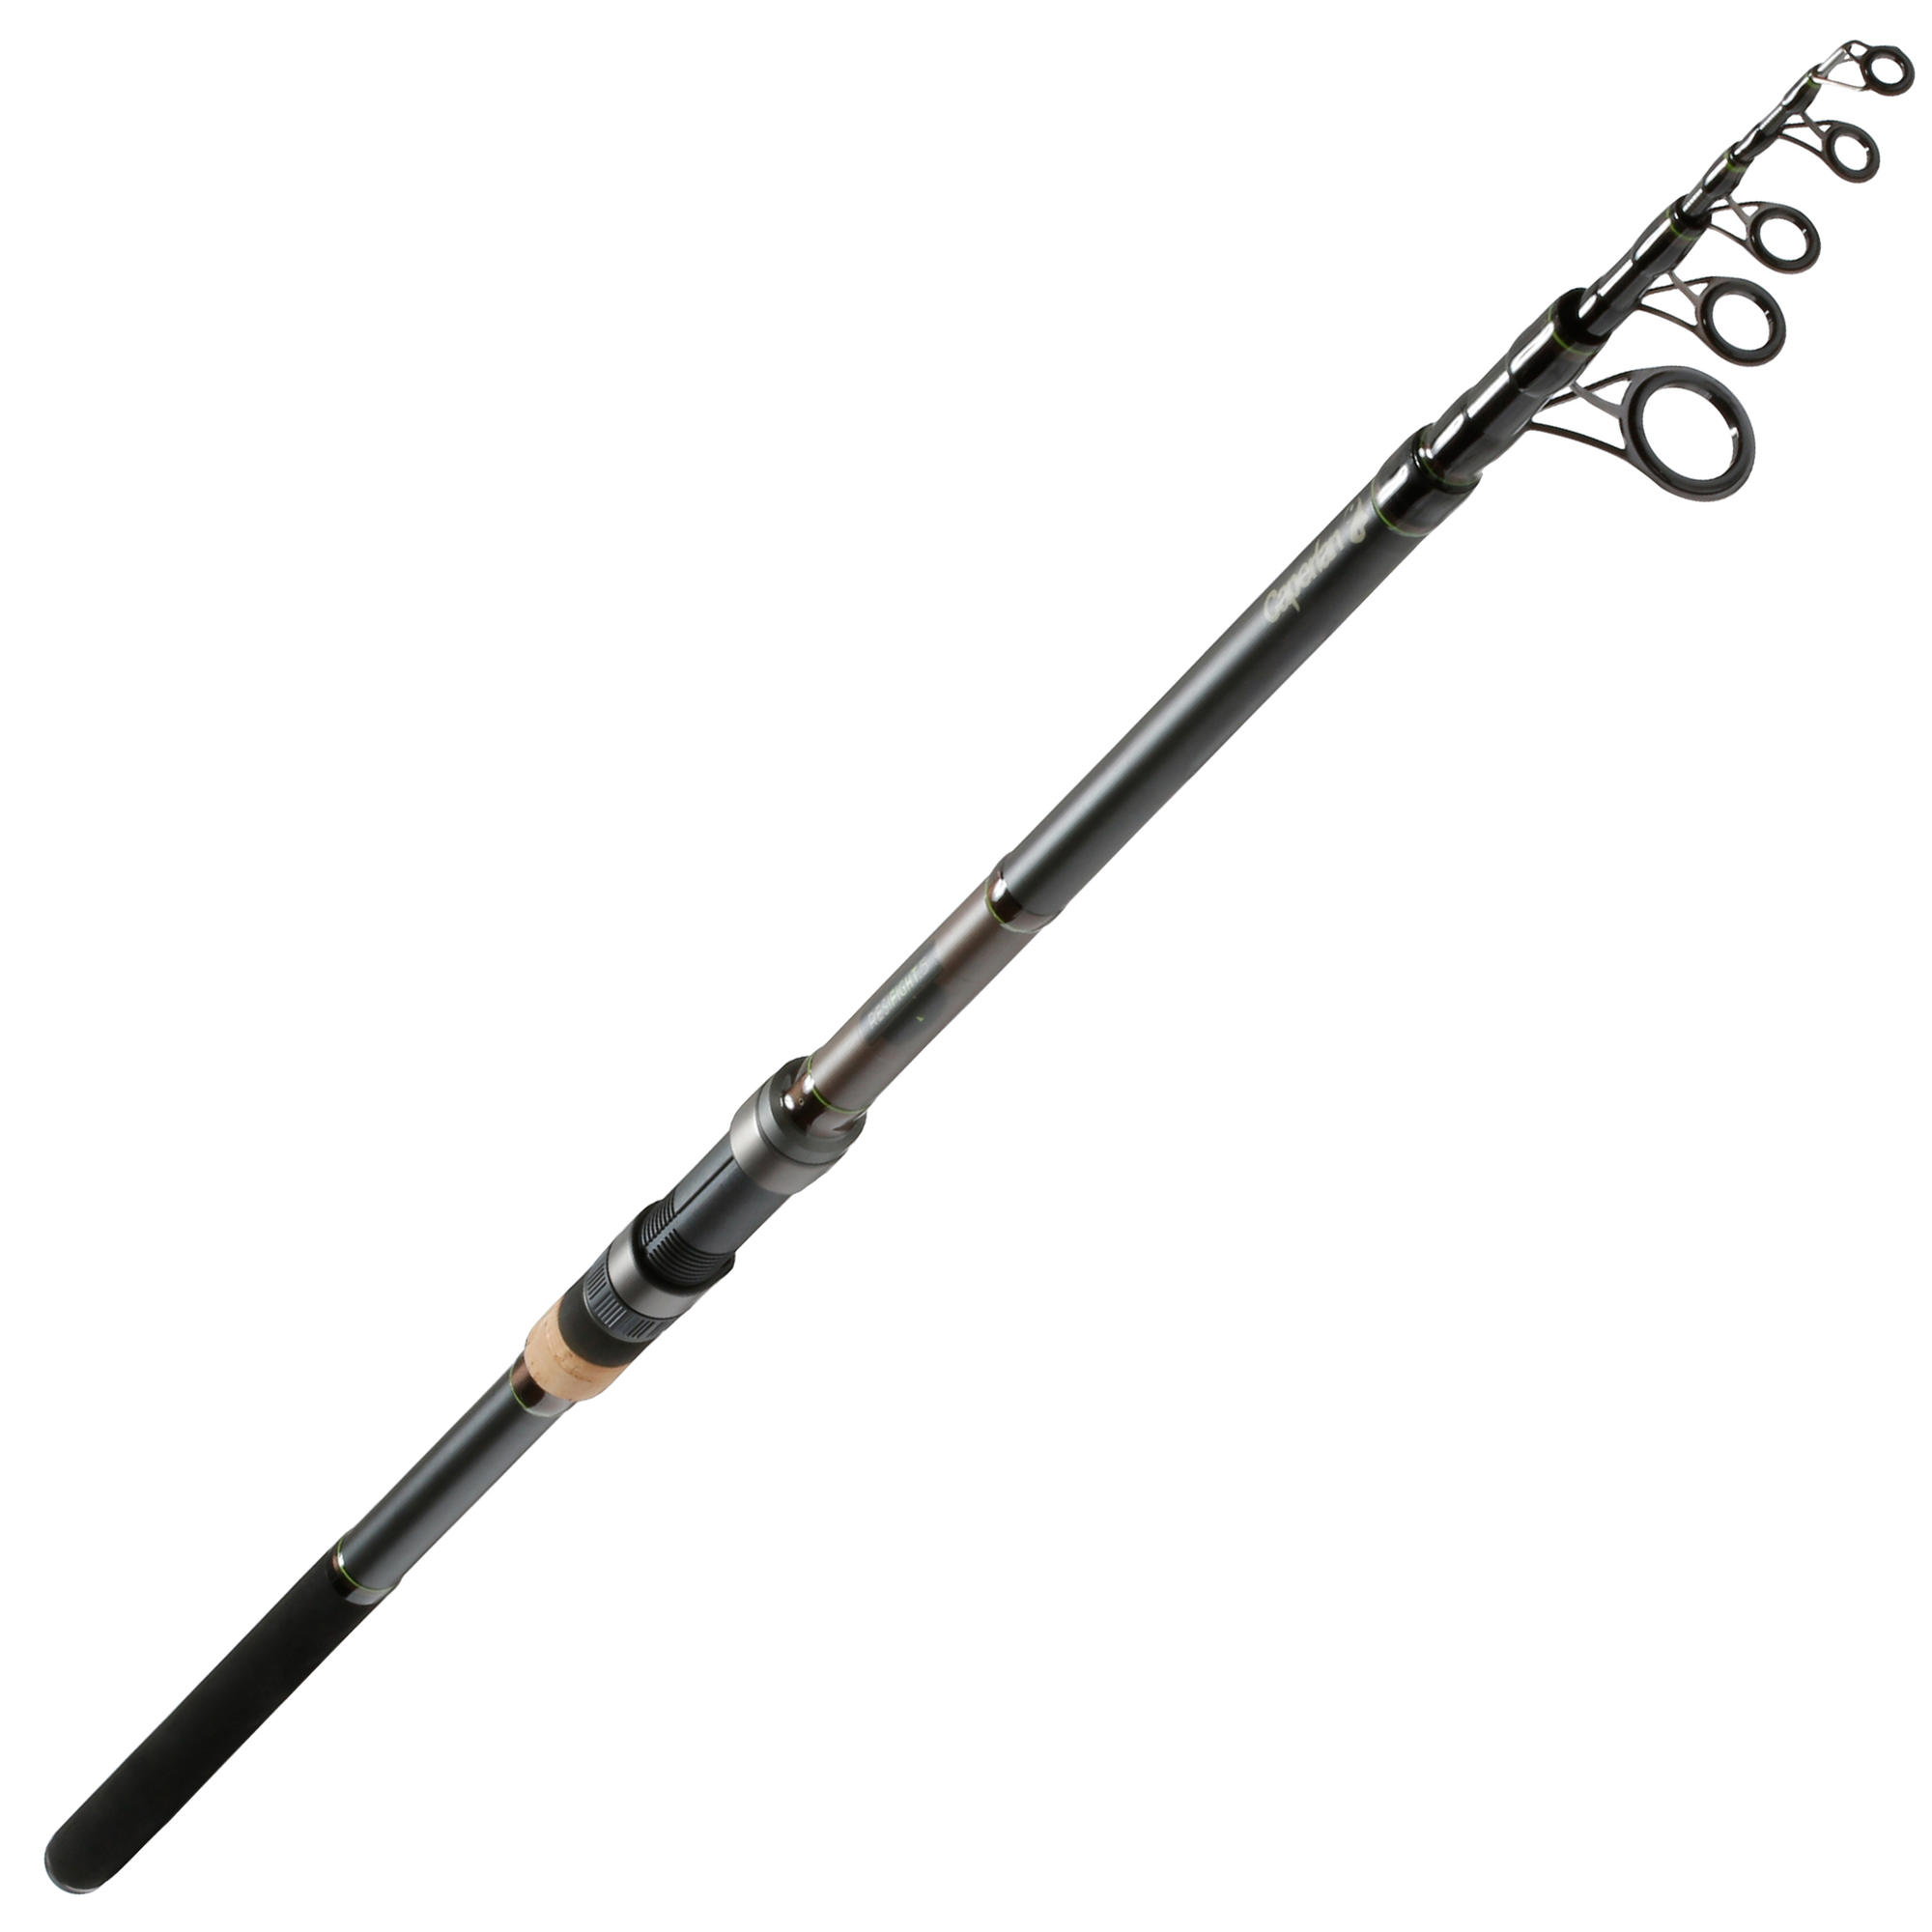 caperlan predator 350 fishing rod